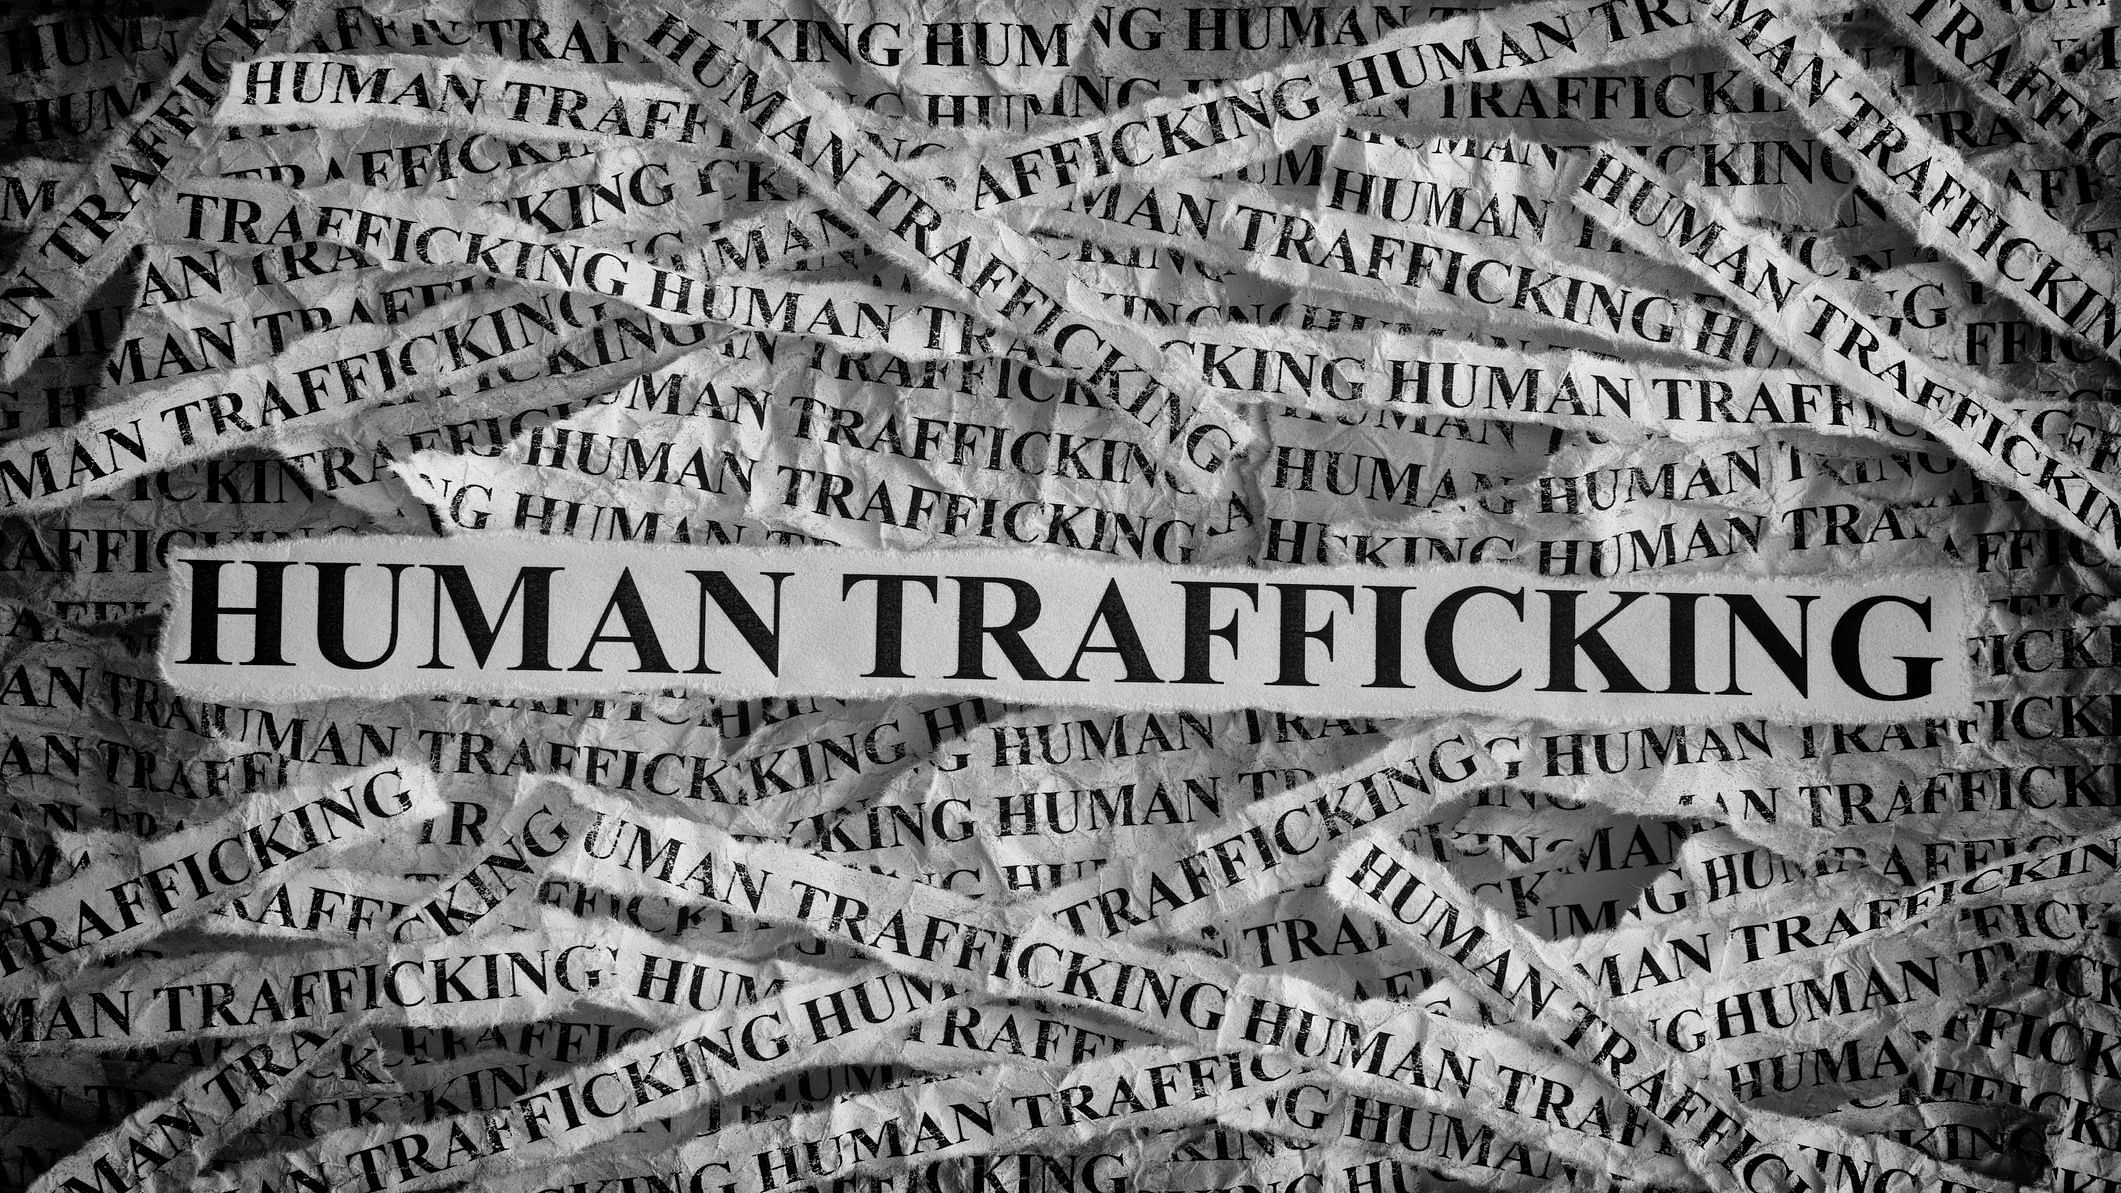 <div class="paragraphs"><p>Representative image of human trafficking written on paper.&nbsp;</p></div>